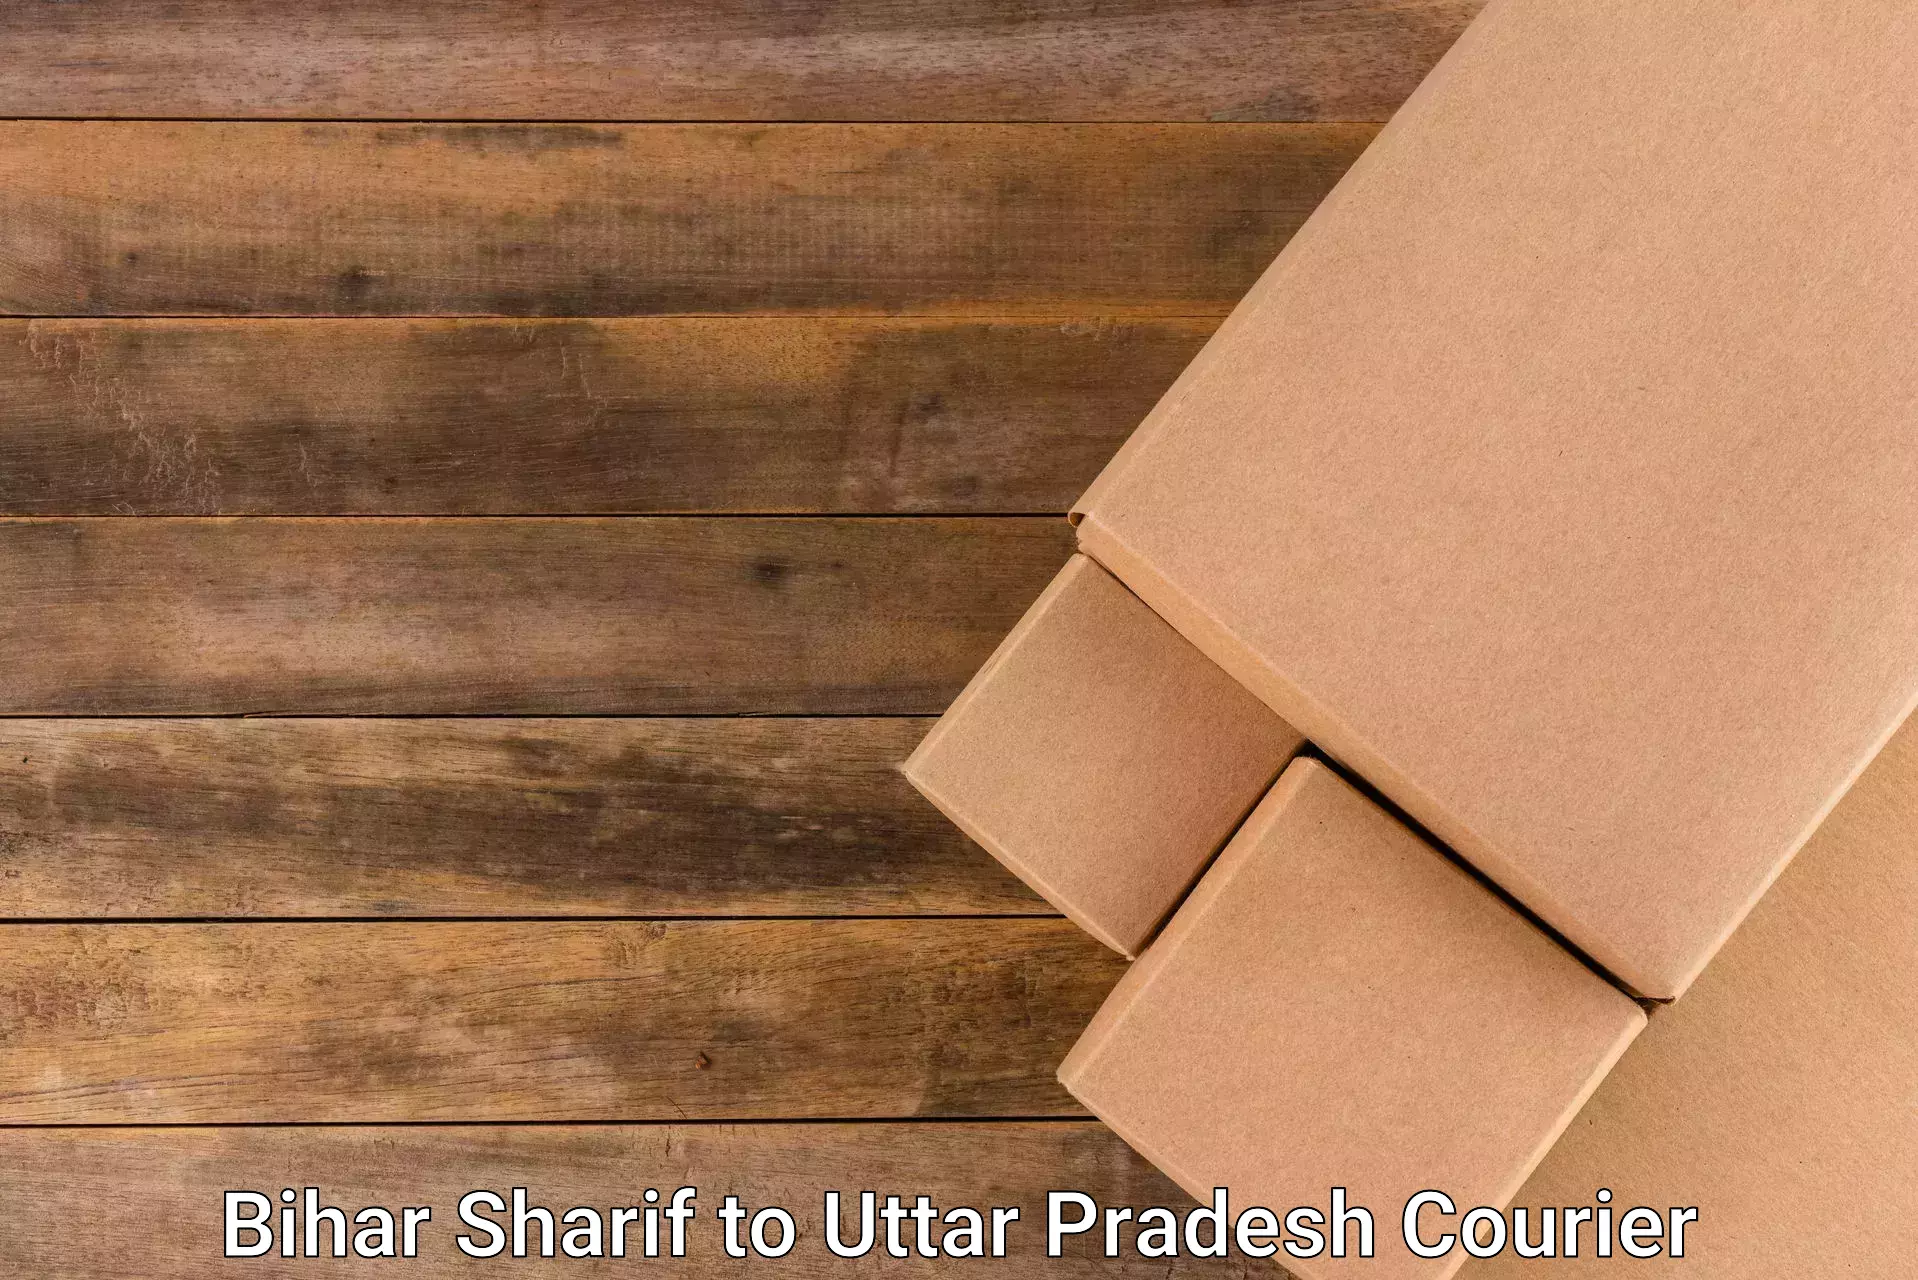 Express package delivery in Bihar Sharif to Uttar Pradesh